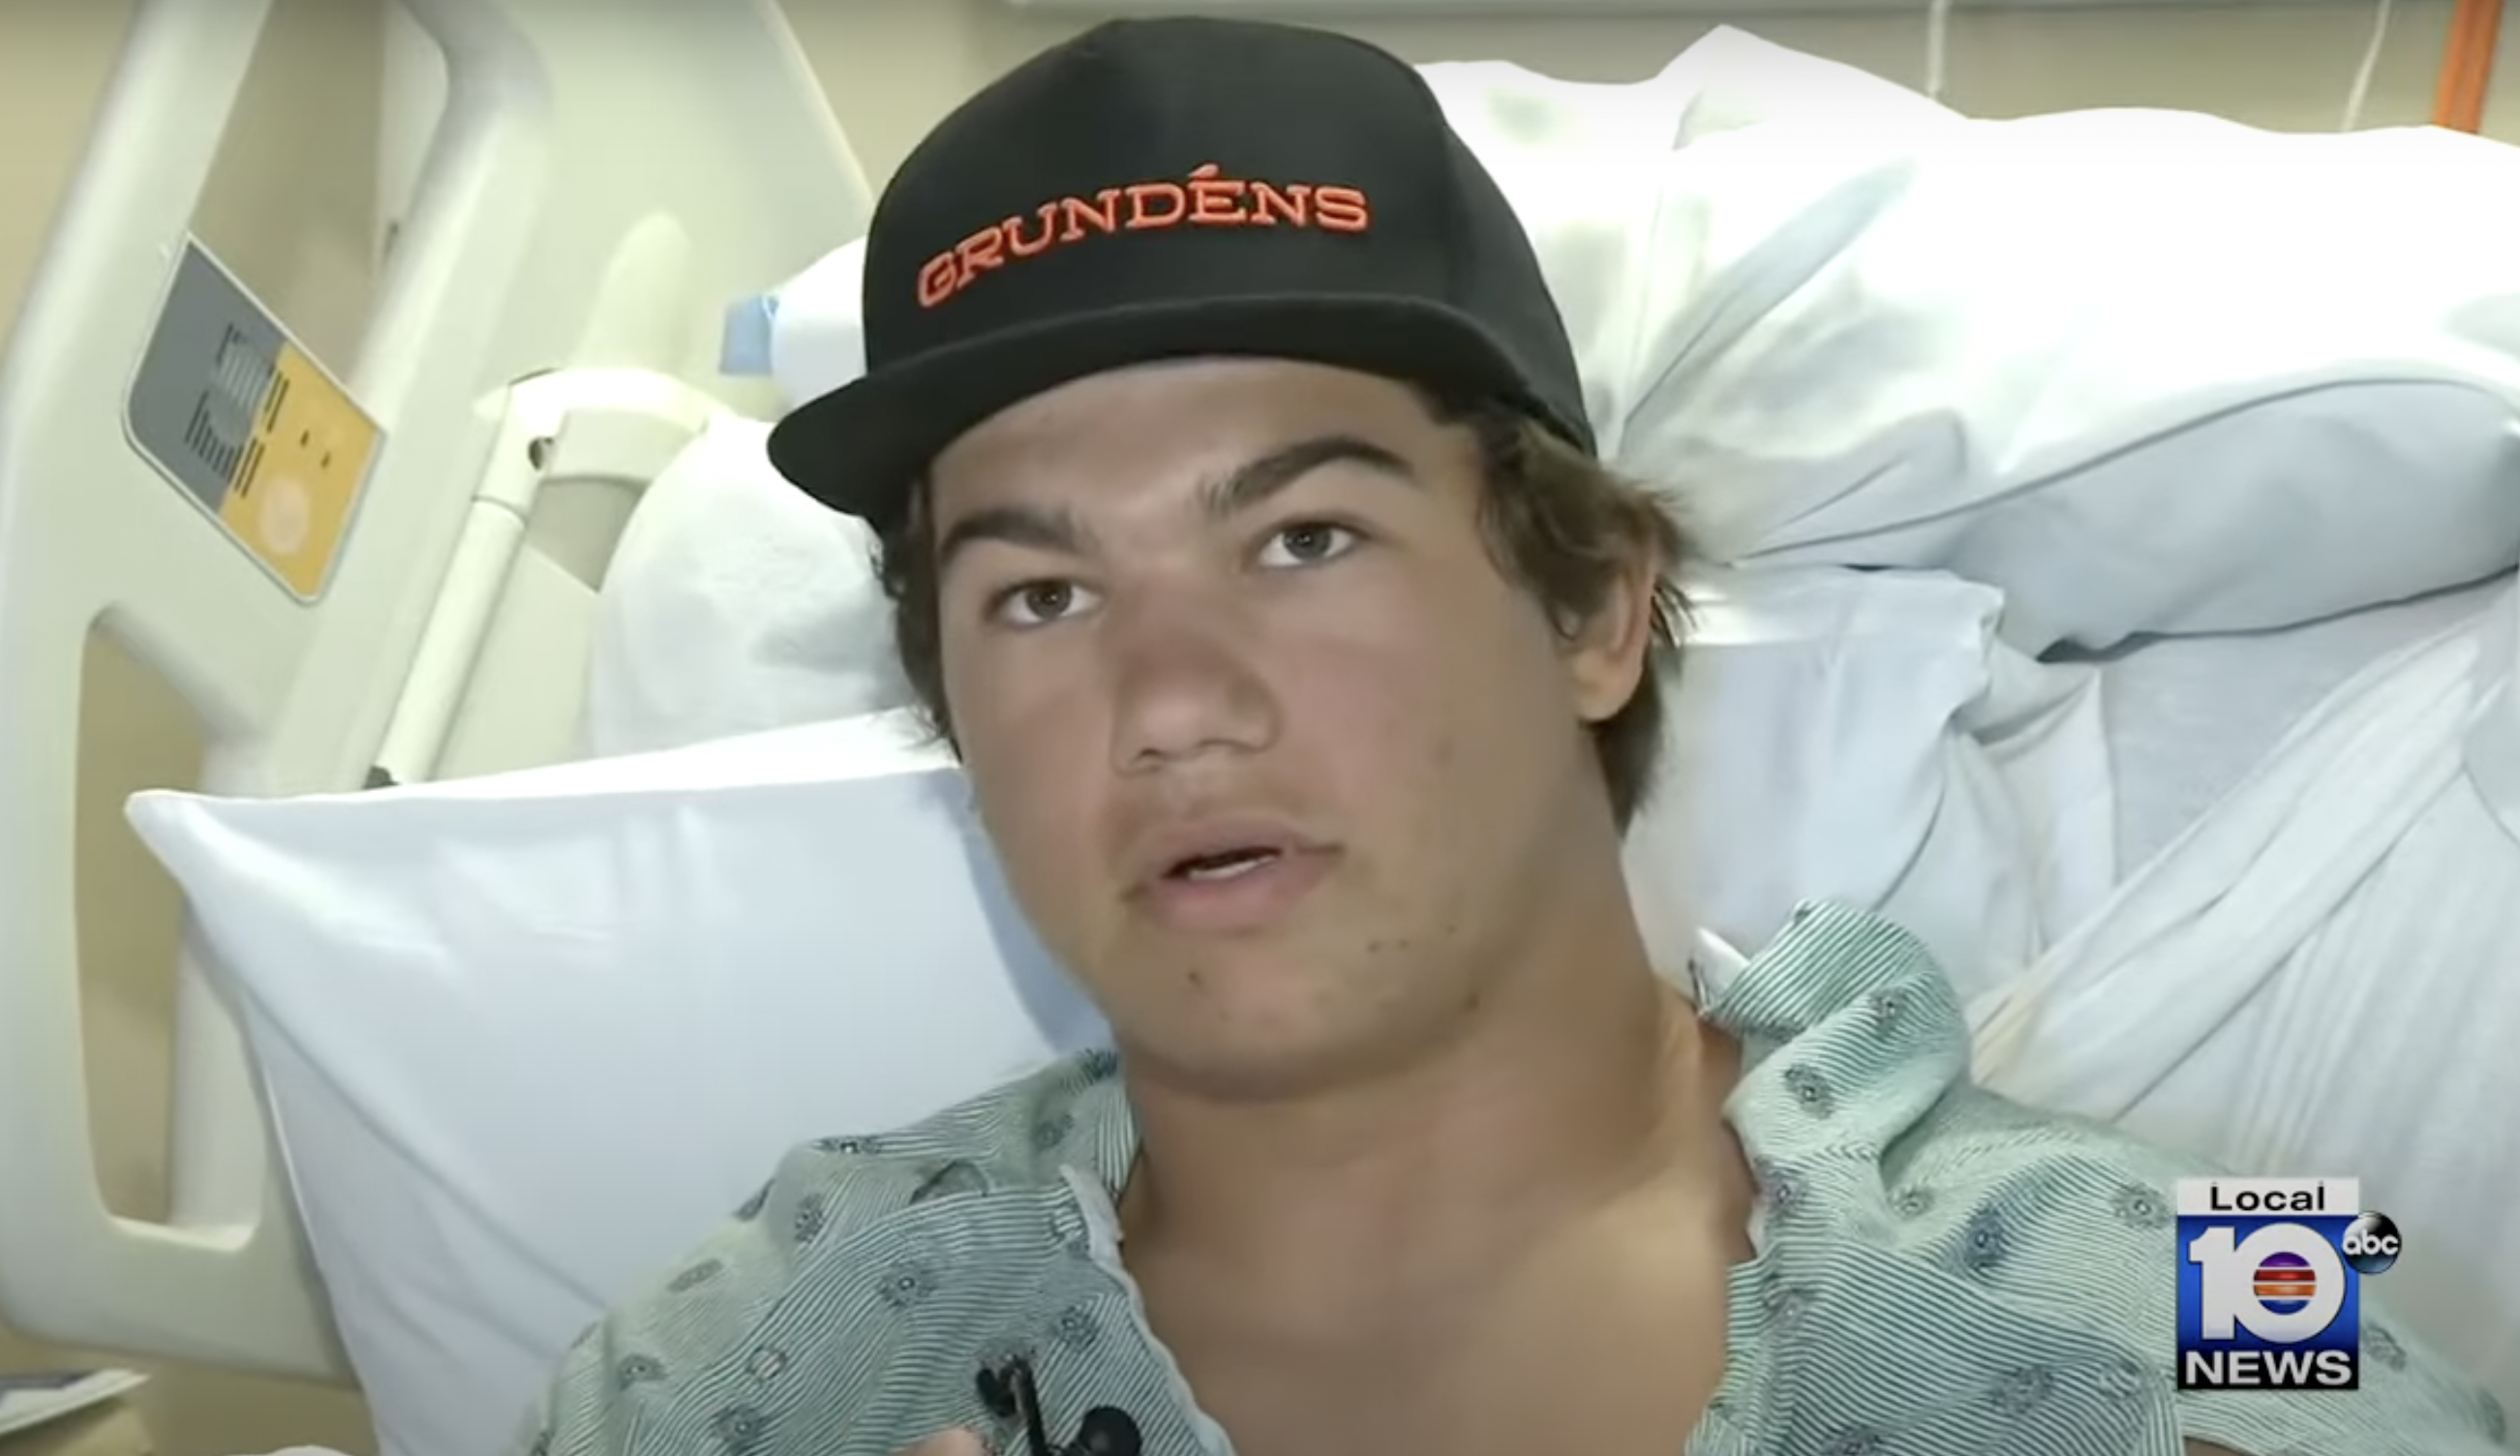 Kevin Blanco in a hospital | Source: https://www.youtube.com/watch?v=S-Sosp21blo